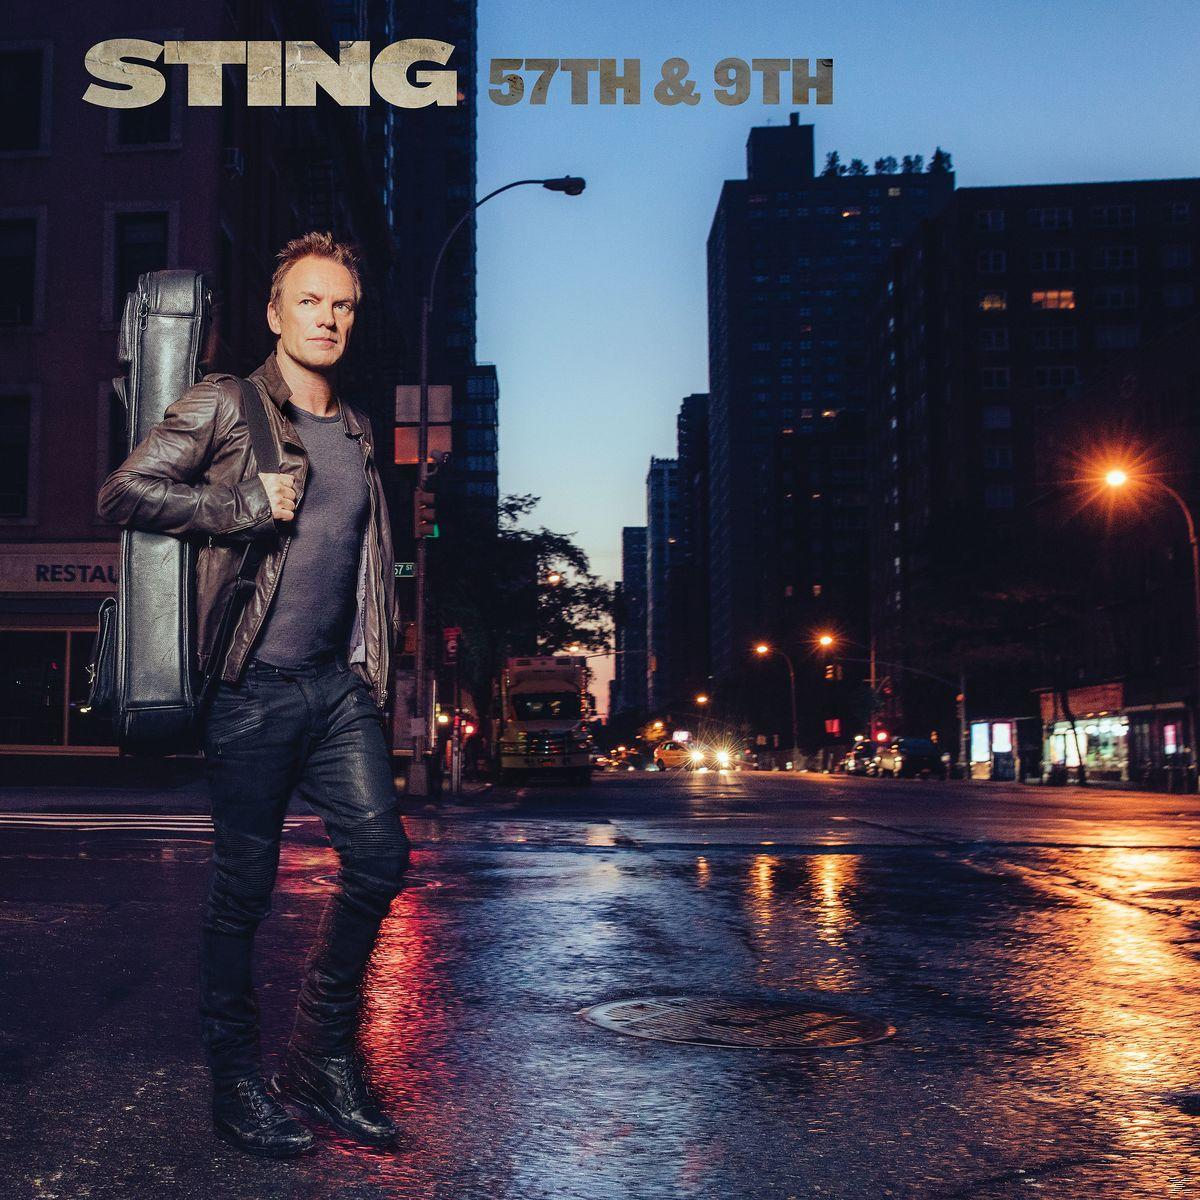 Vinyl) (Vinyl) - - 9th 57th Sting (Black &